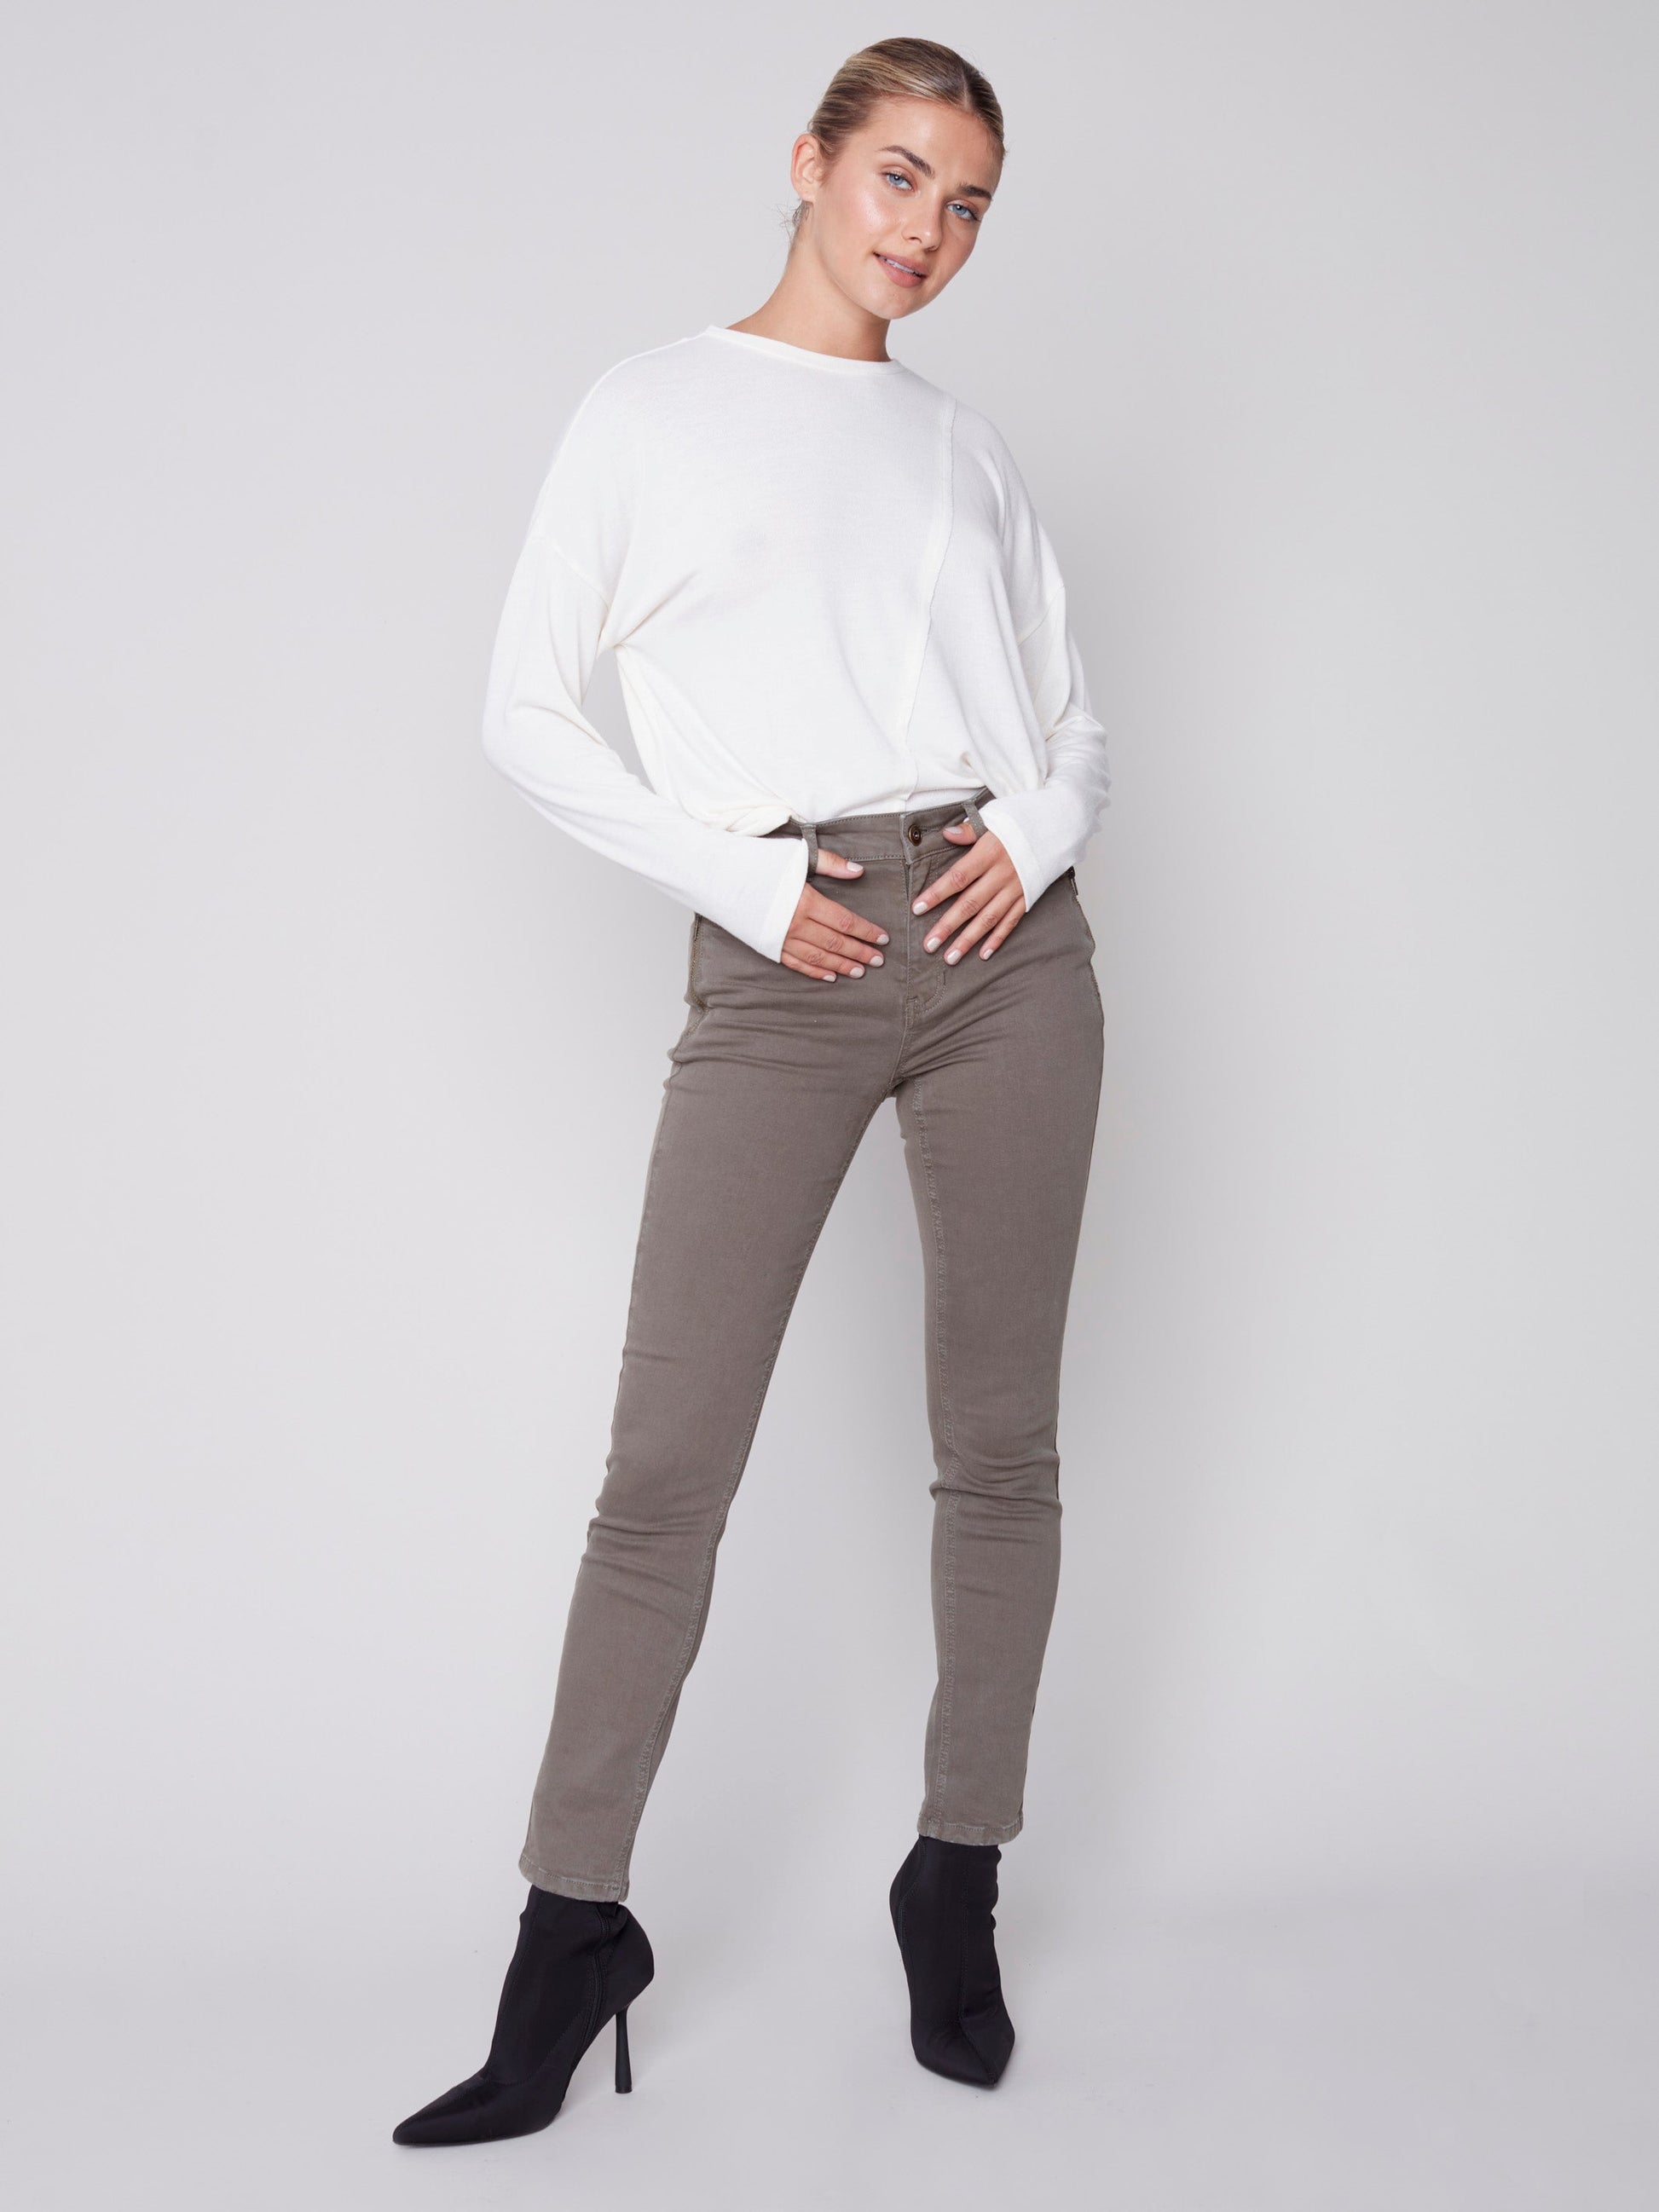 A woman wearing comfortable Charlie B Side Zip Pocket Skinny Jeans.